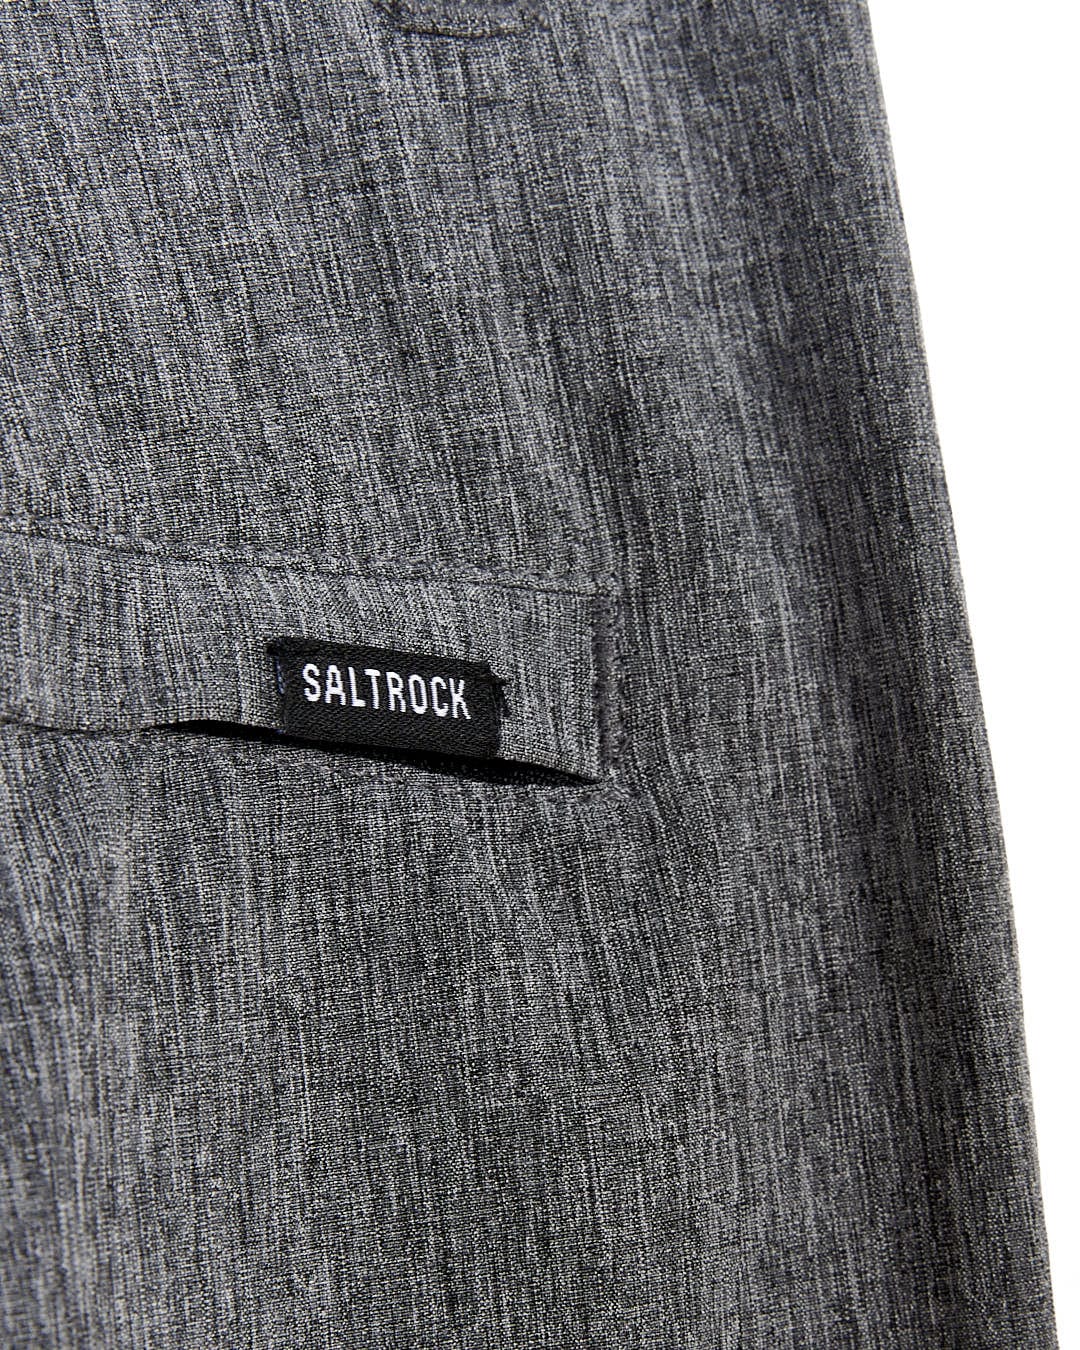 A close up of a Saltrock Amphibian - Kids Boardshorts - Grey with a black label on it.